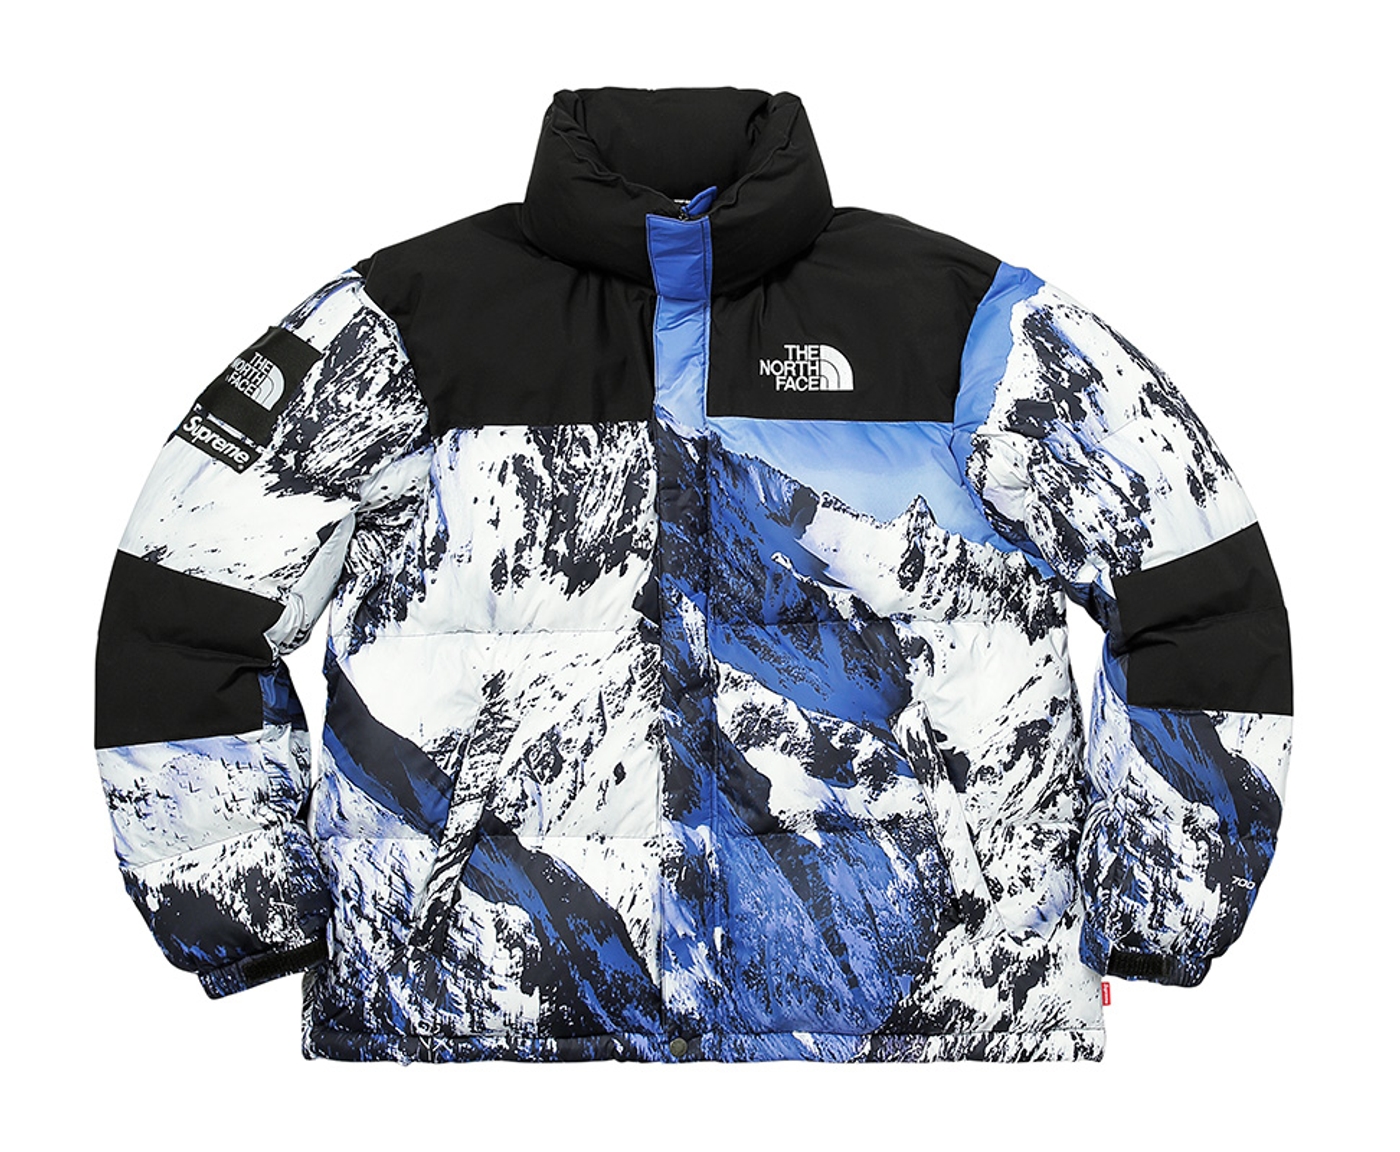 Mountain Baltoro Jacket with 700 fill down insulation. (8/22)